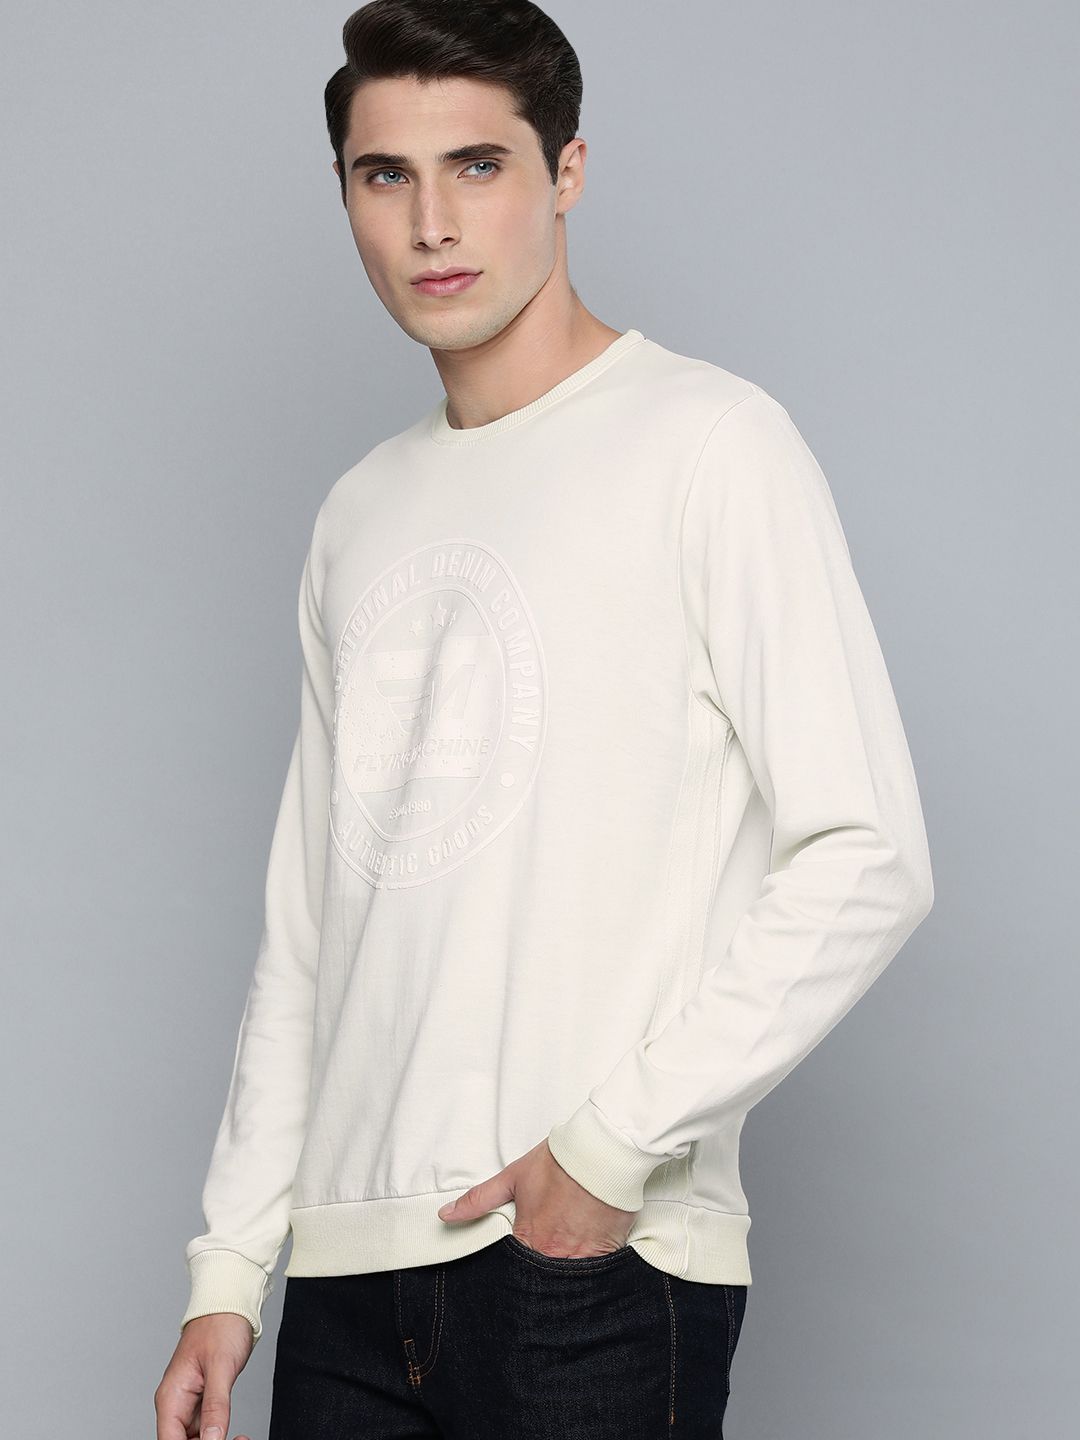 Printed Cotton Slim Fit Men's Sweatshirt